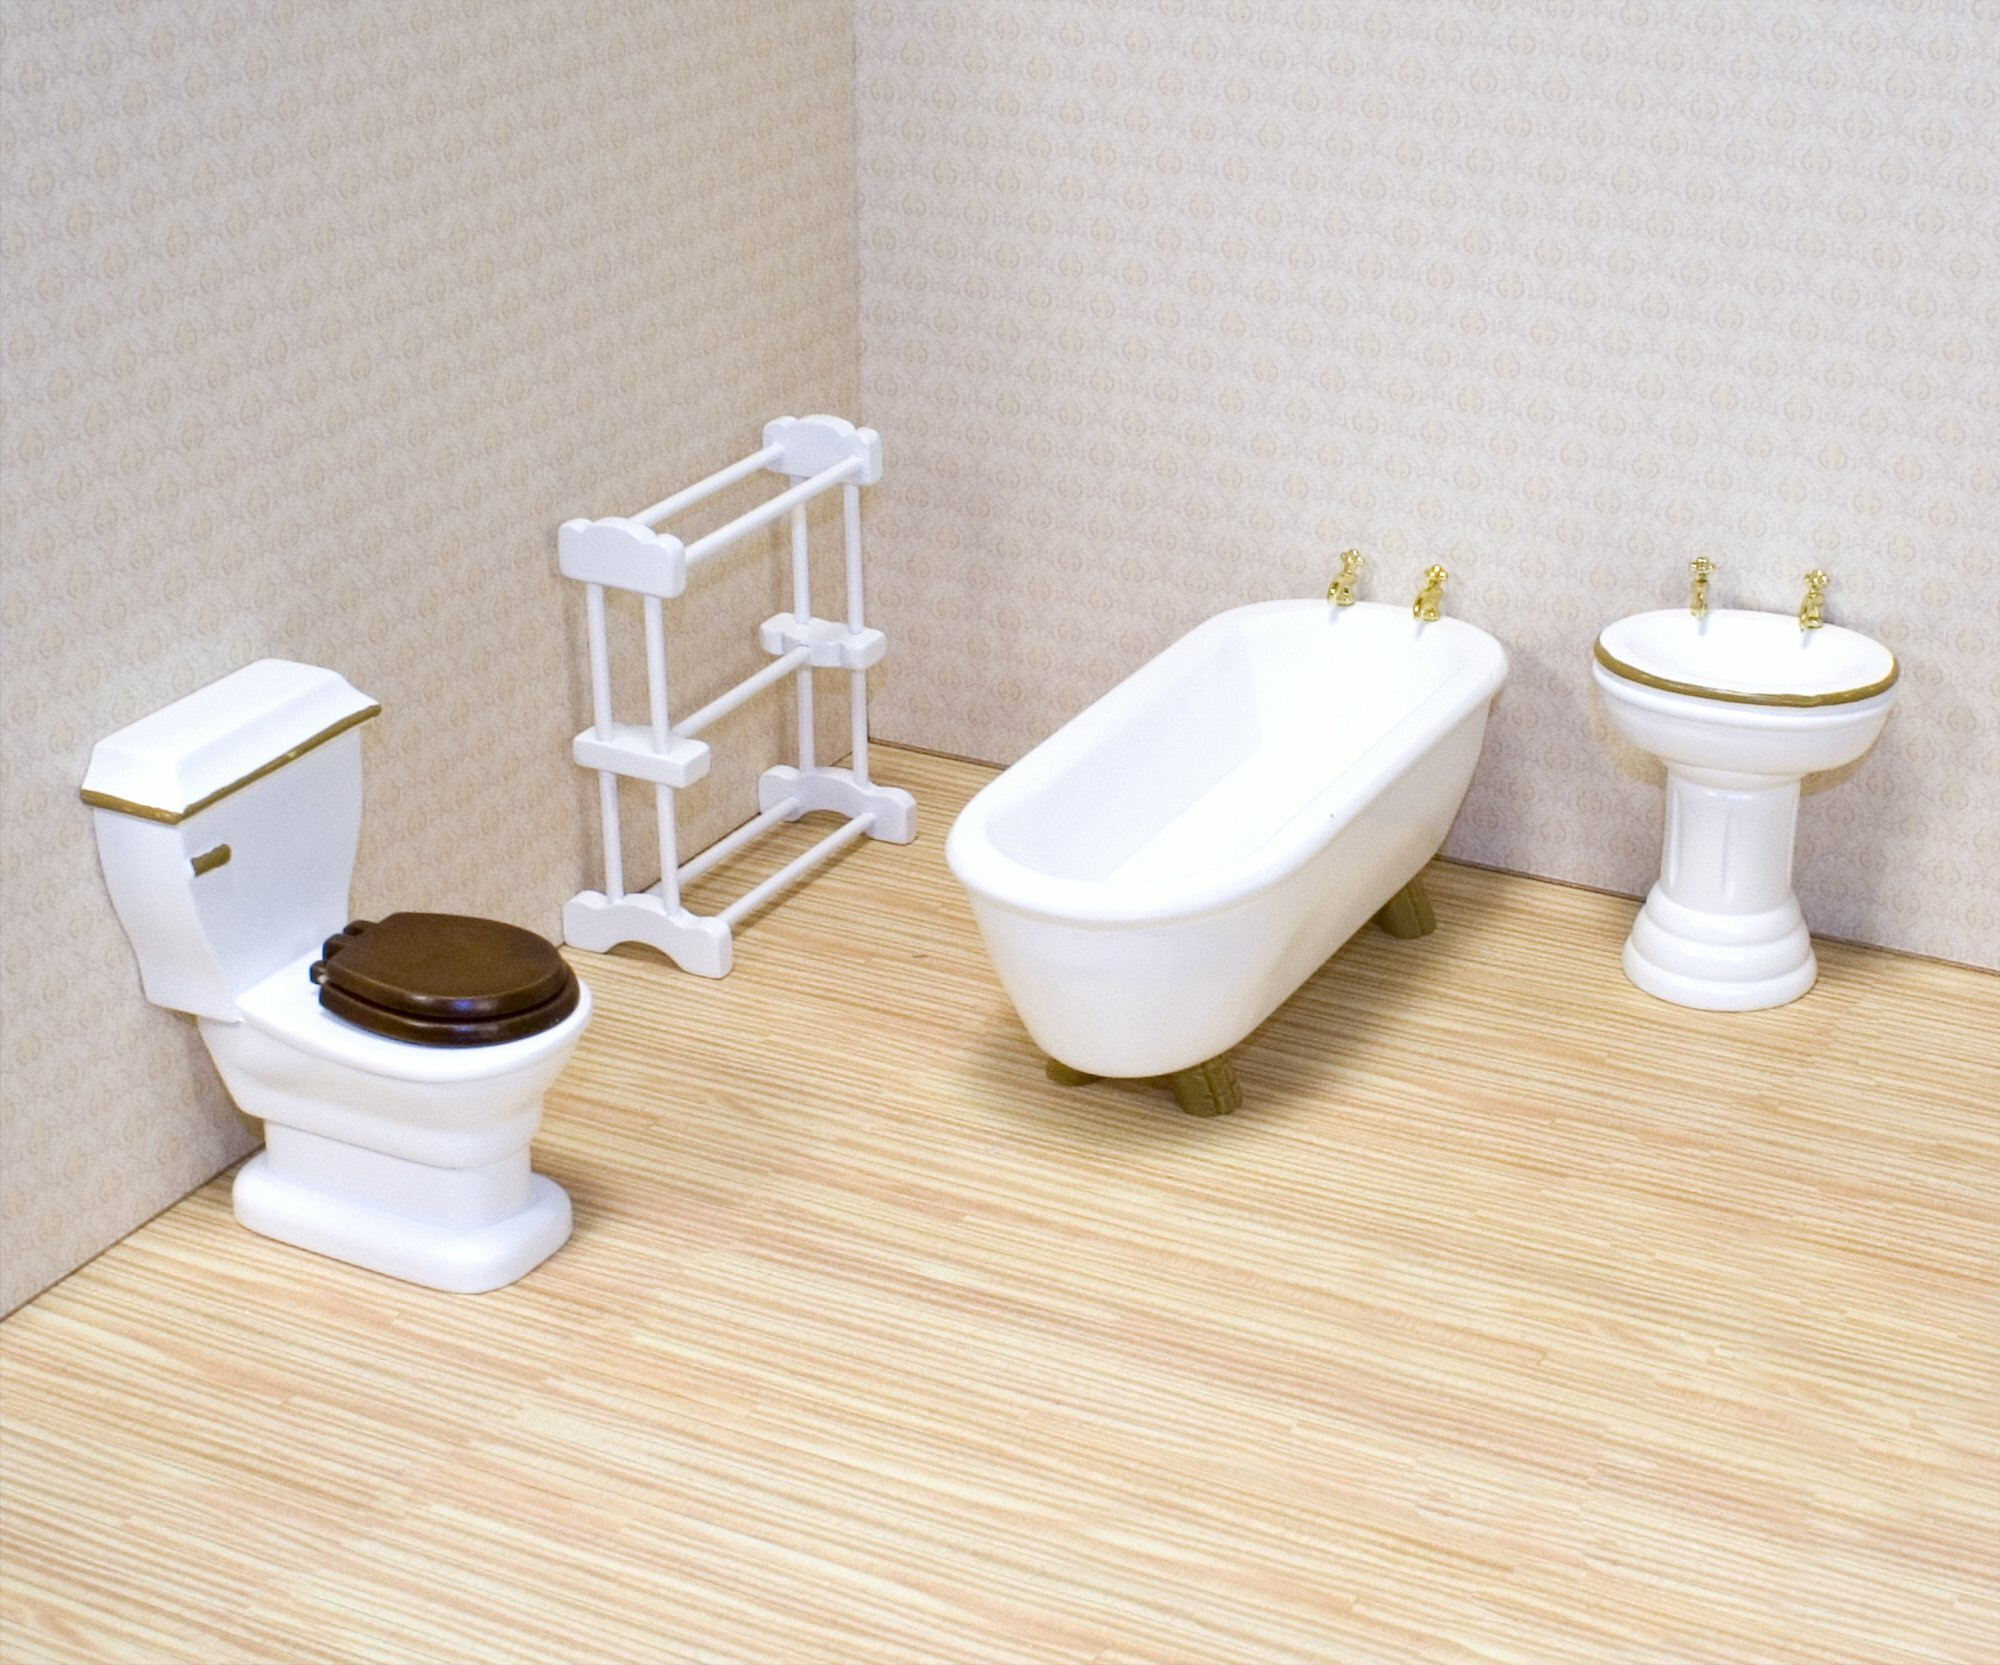 Melissa Doug Dollhouse Bathroom Furniture Reviews Wayfair in dimensions 2000 X 1665